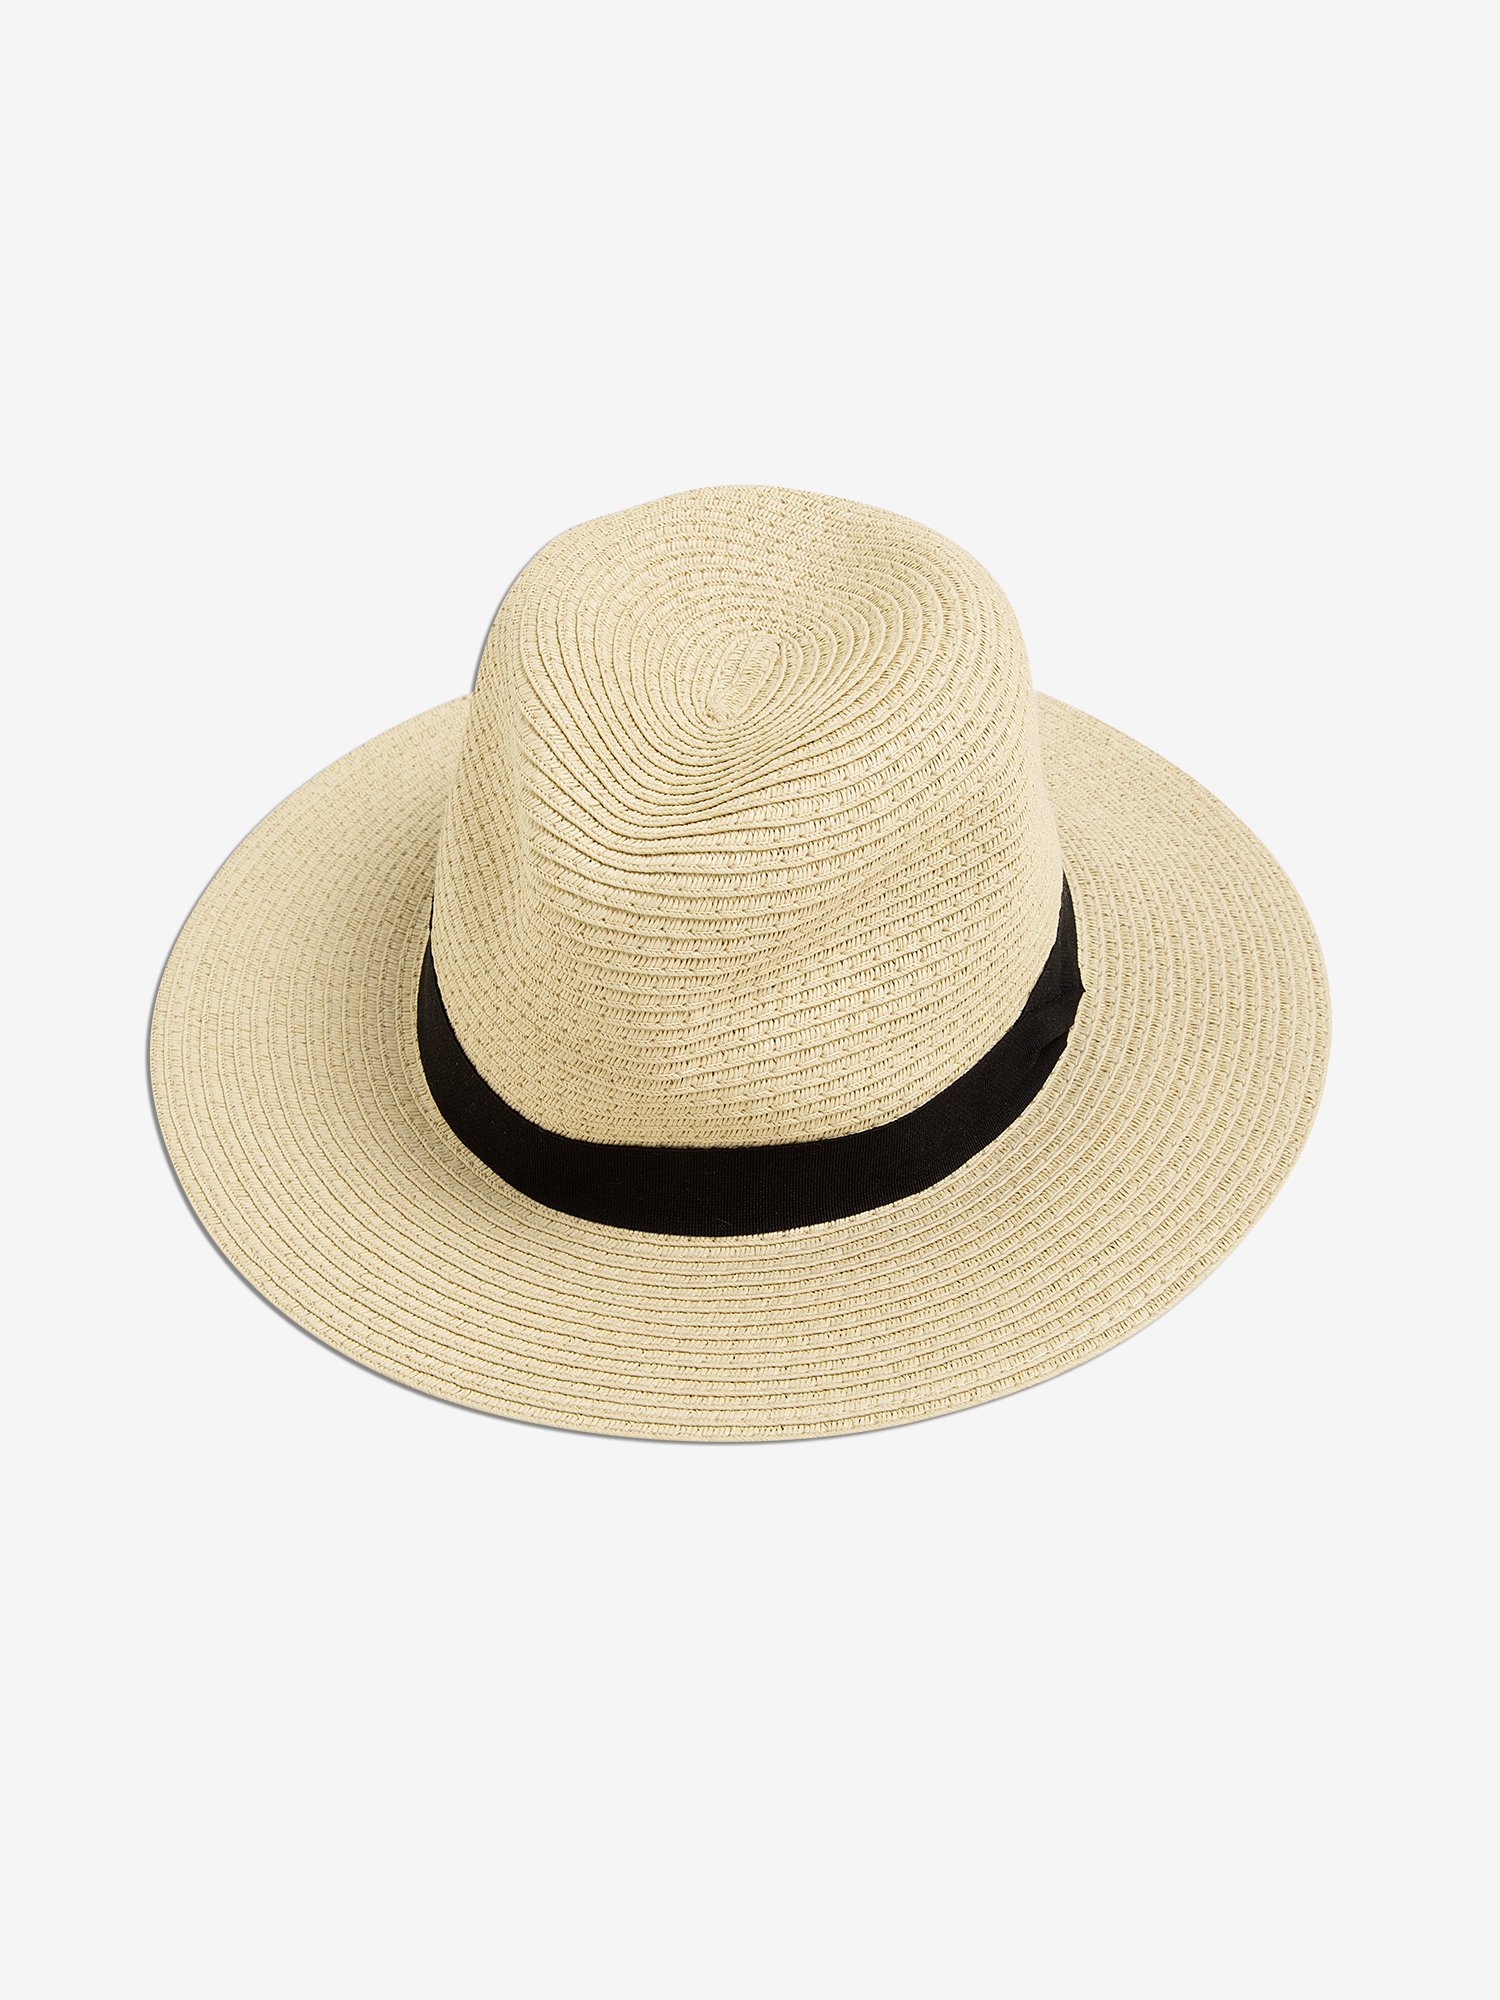 Hasır şapka product image